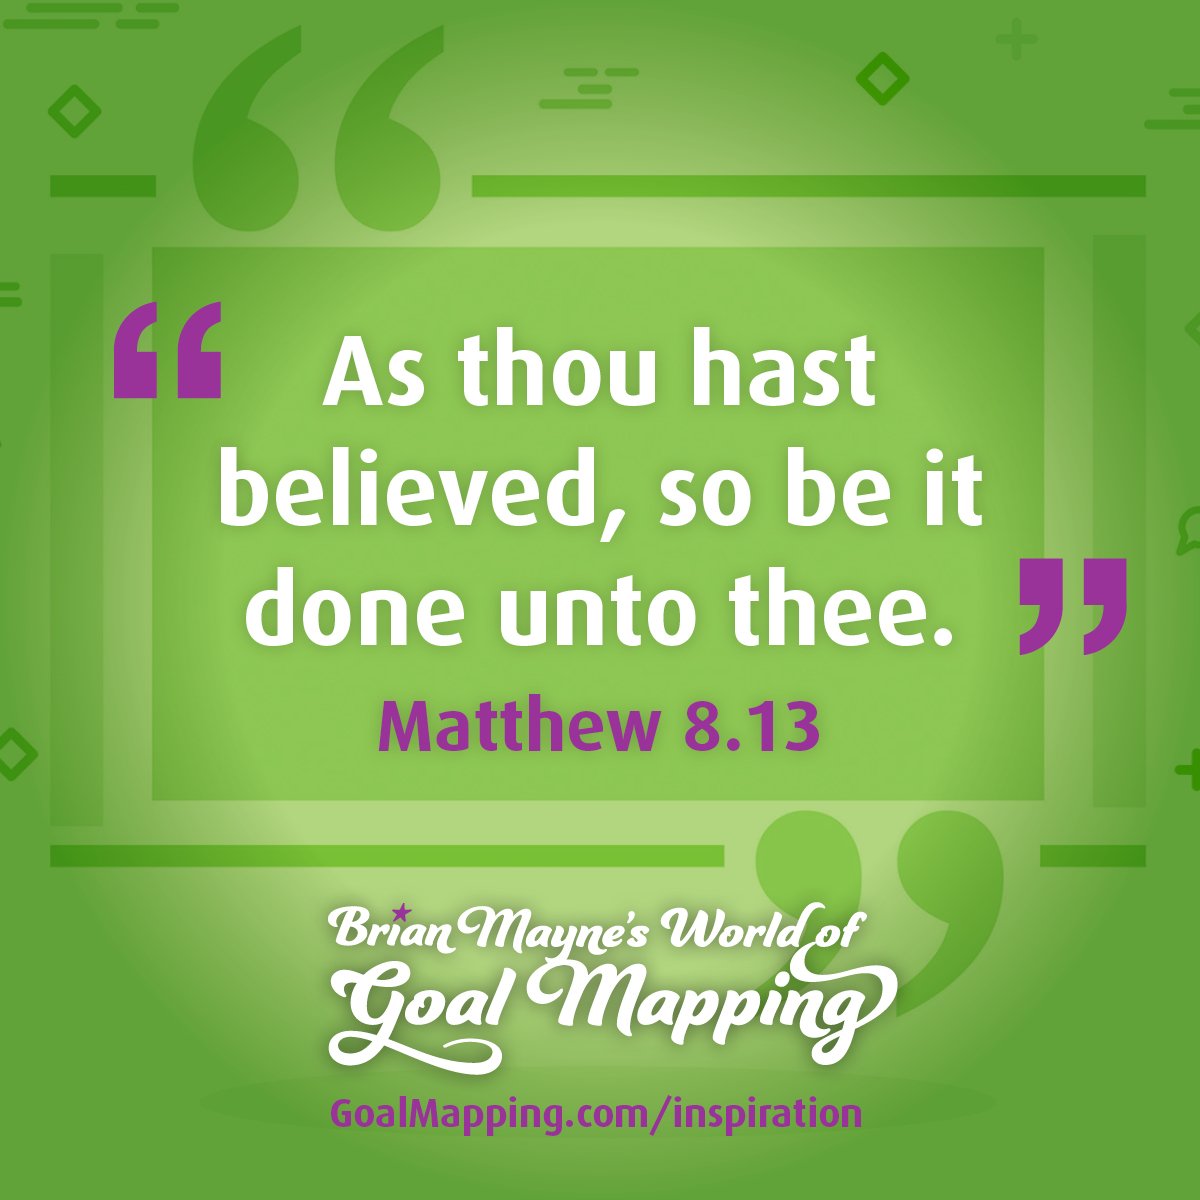 "As thou hast believed, so be it done unto thee." Matthew 8.13